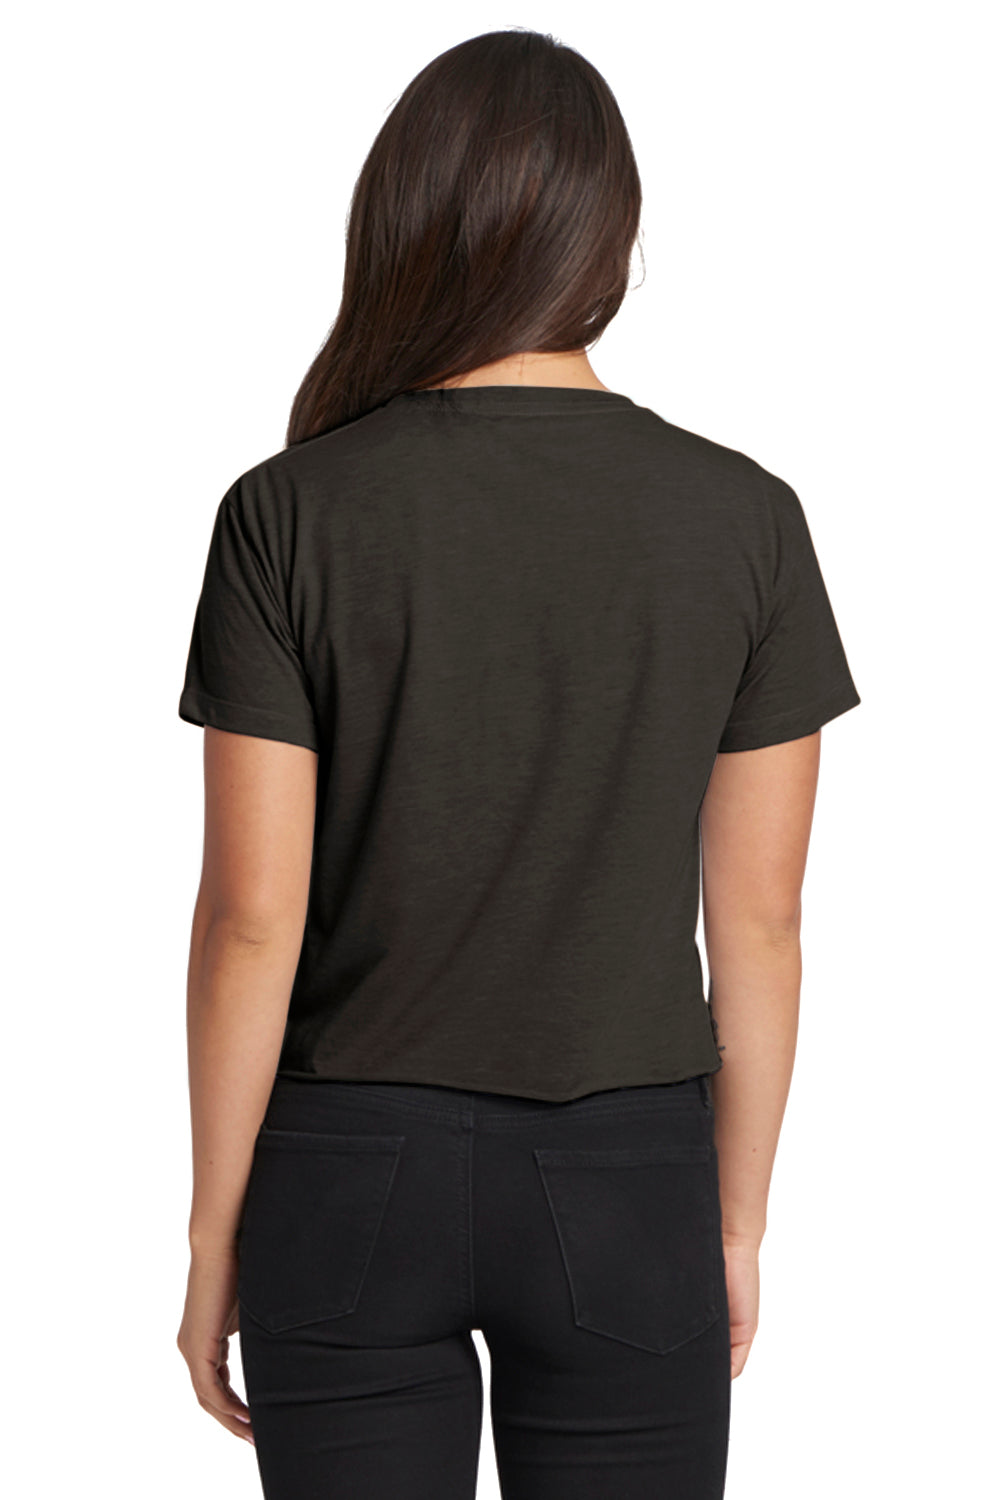 Next Level N5080 Womens Festival Cali Crop Short Sleeve Crewneck T-Shirt Charcoal Grey Back